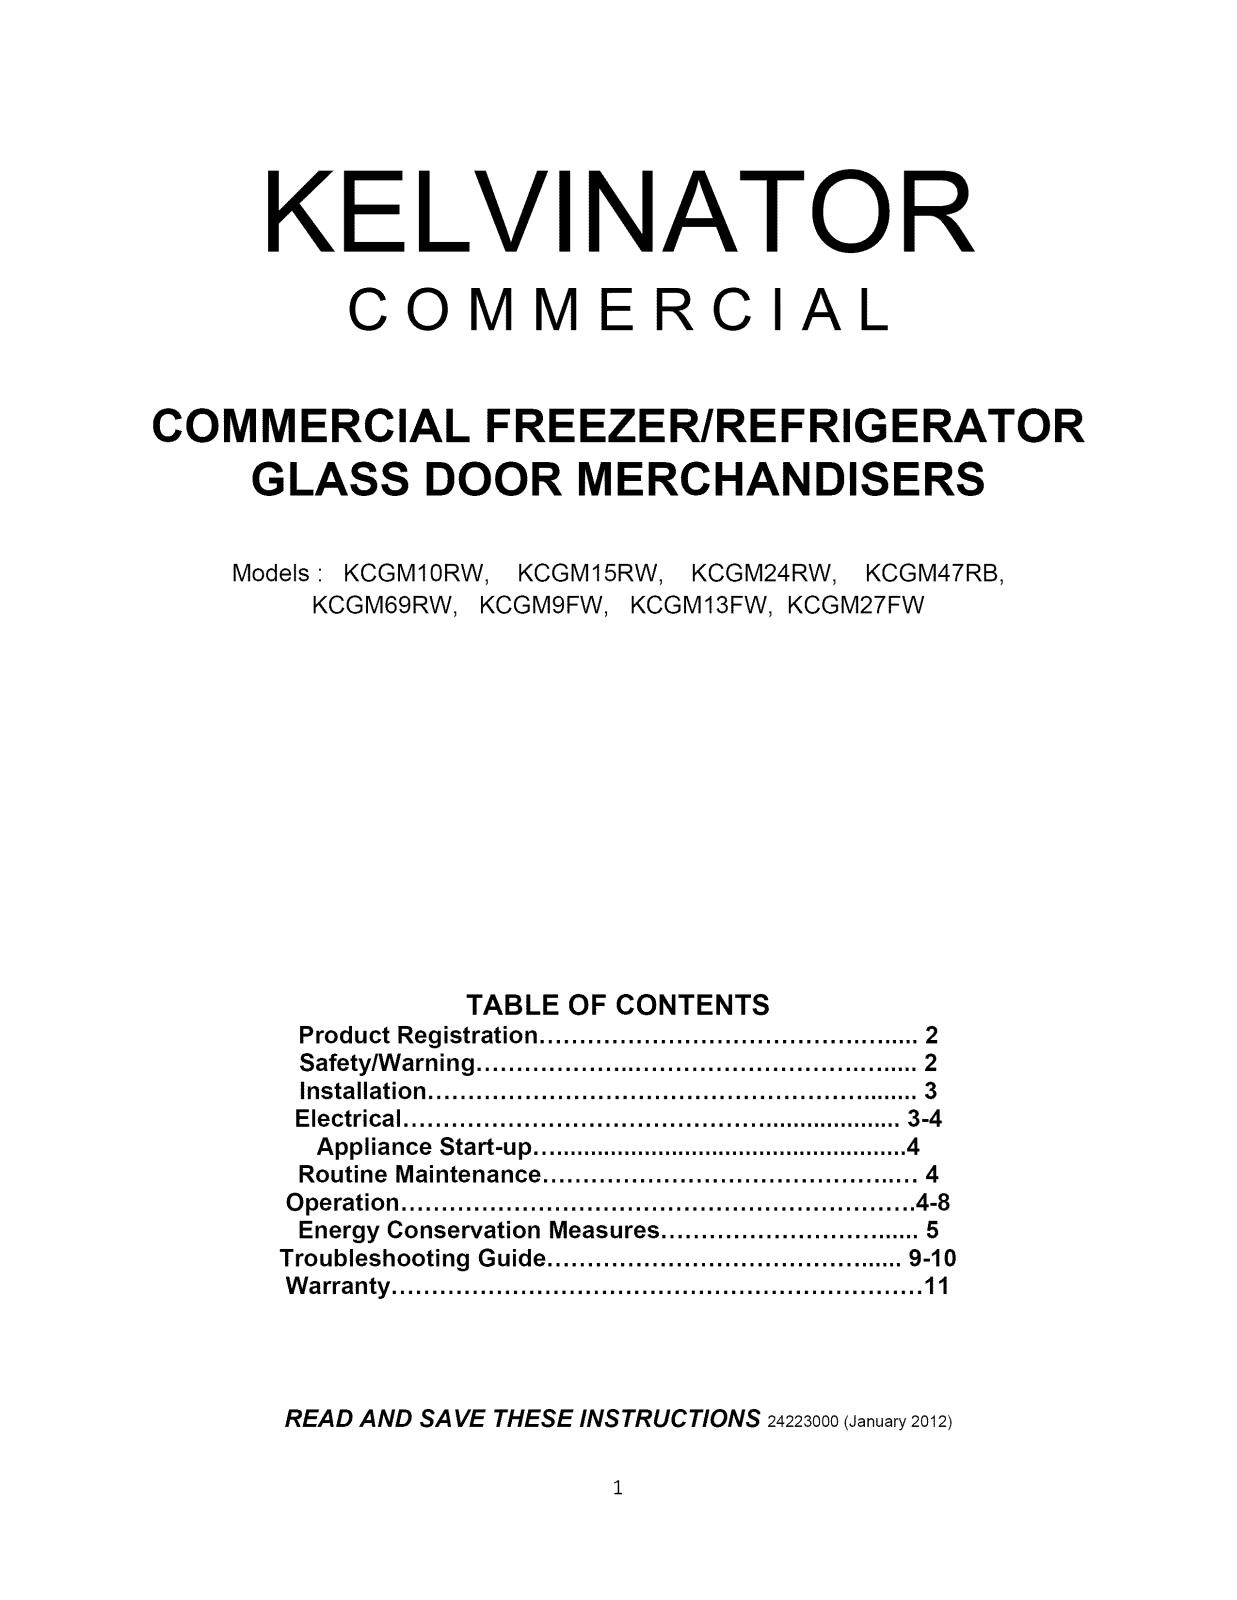 Kelvinator KCGM9FW, KCGM47RB, KCGM24RW, KCGM24RB, KCGM10RW Owner’s Manual